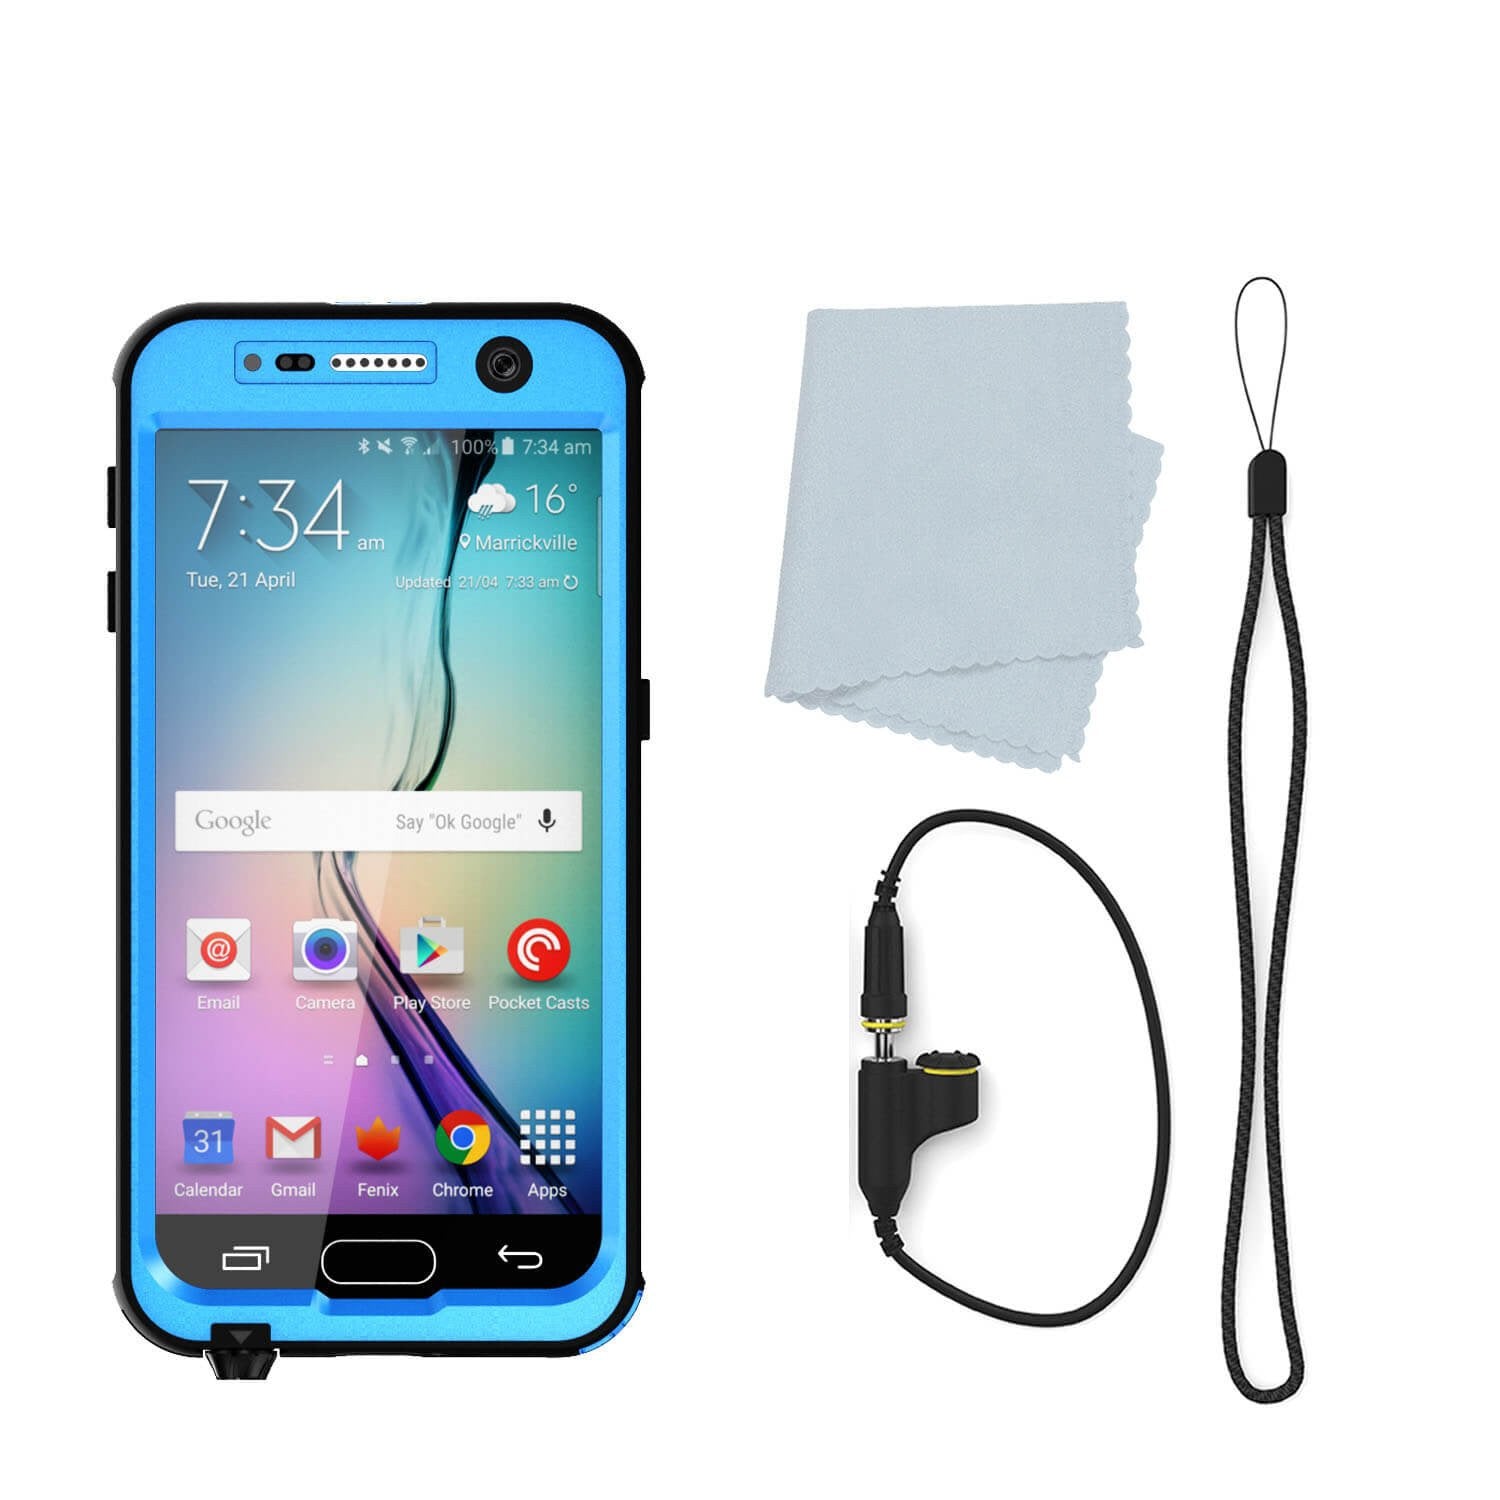 Galaxy S7 Waterproof Case PunkCase StudStar Light Blue Thin 6.6ft Underwater IP68 Shock/Dirt Proof